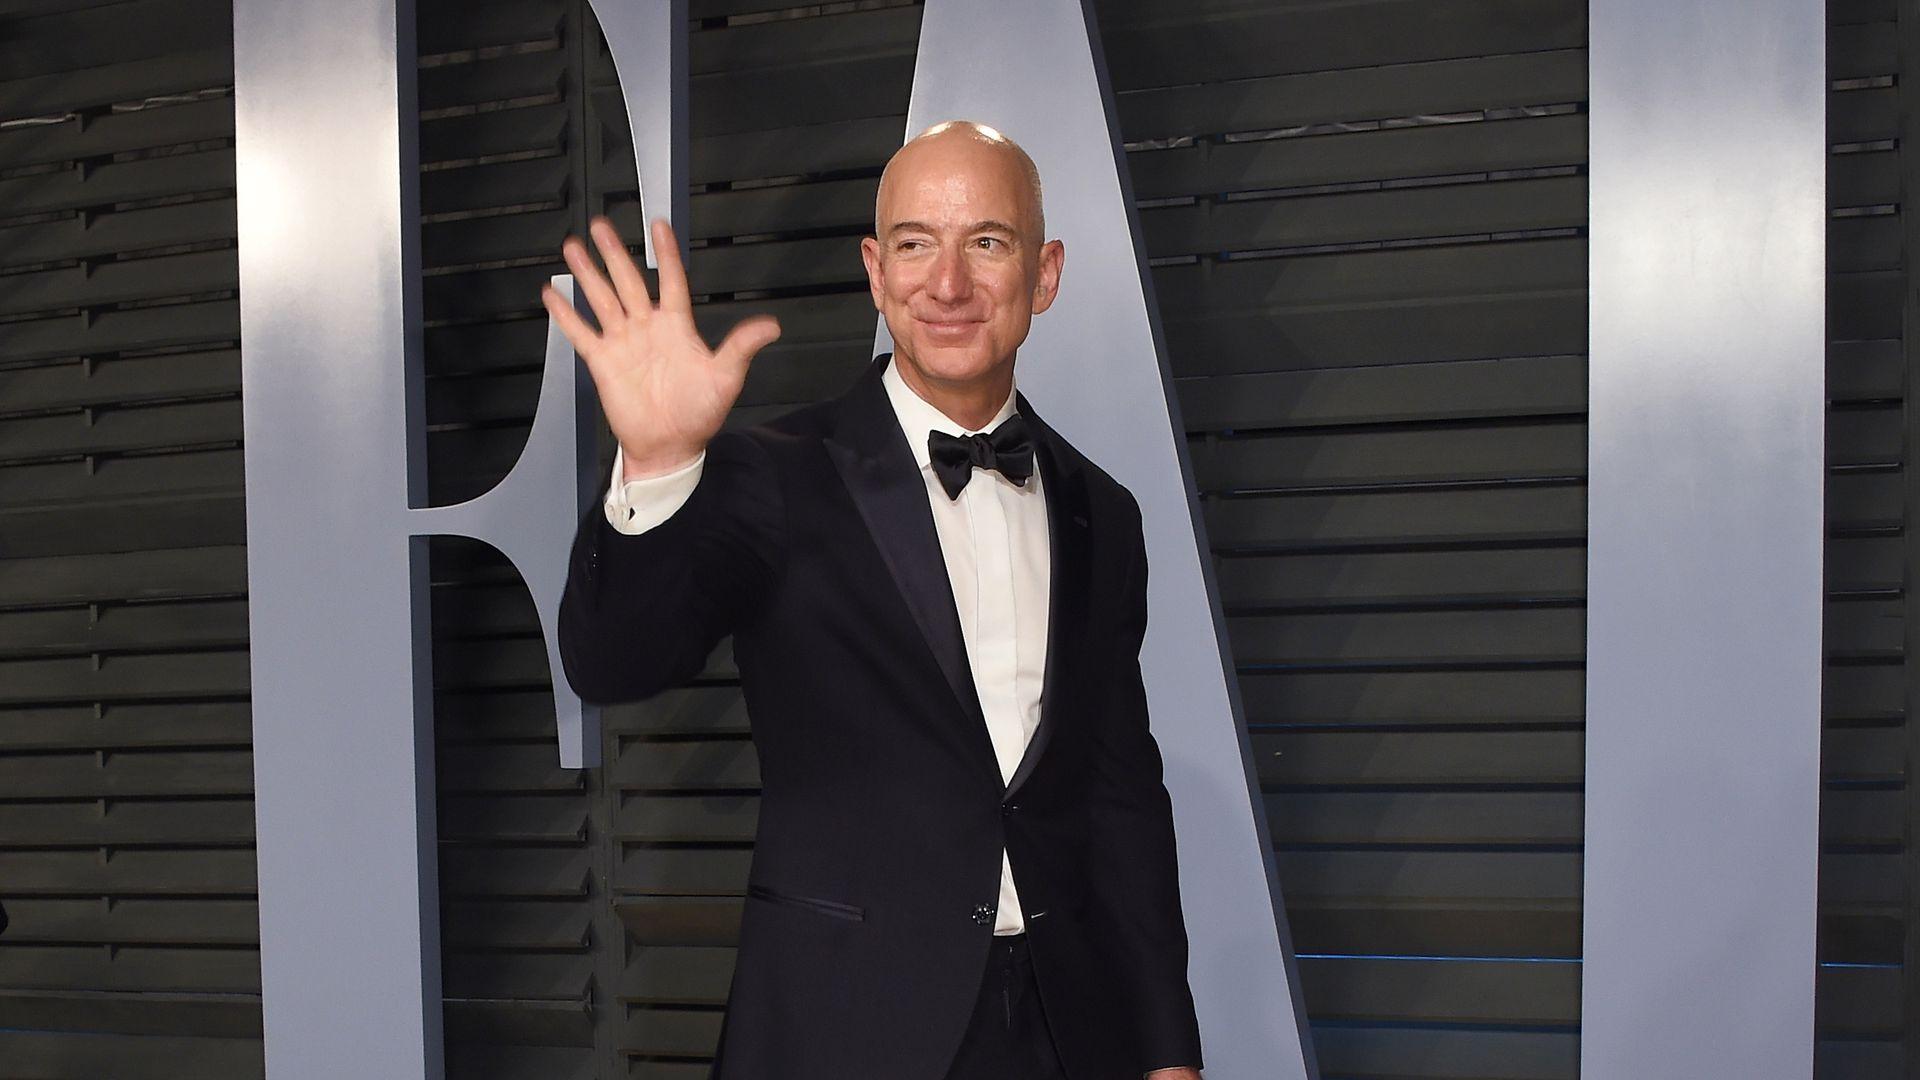 Jeff Bezos tops Forbes' annual billionaires list